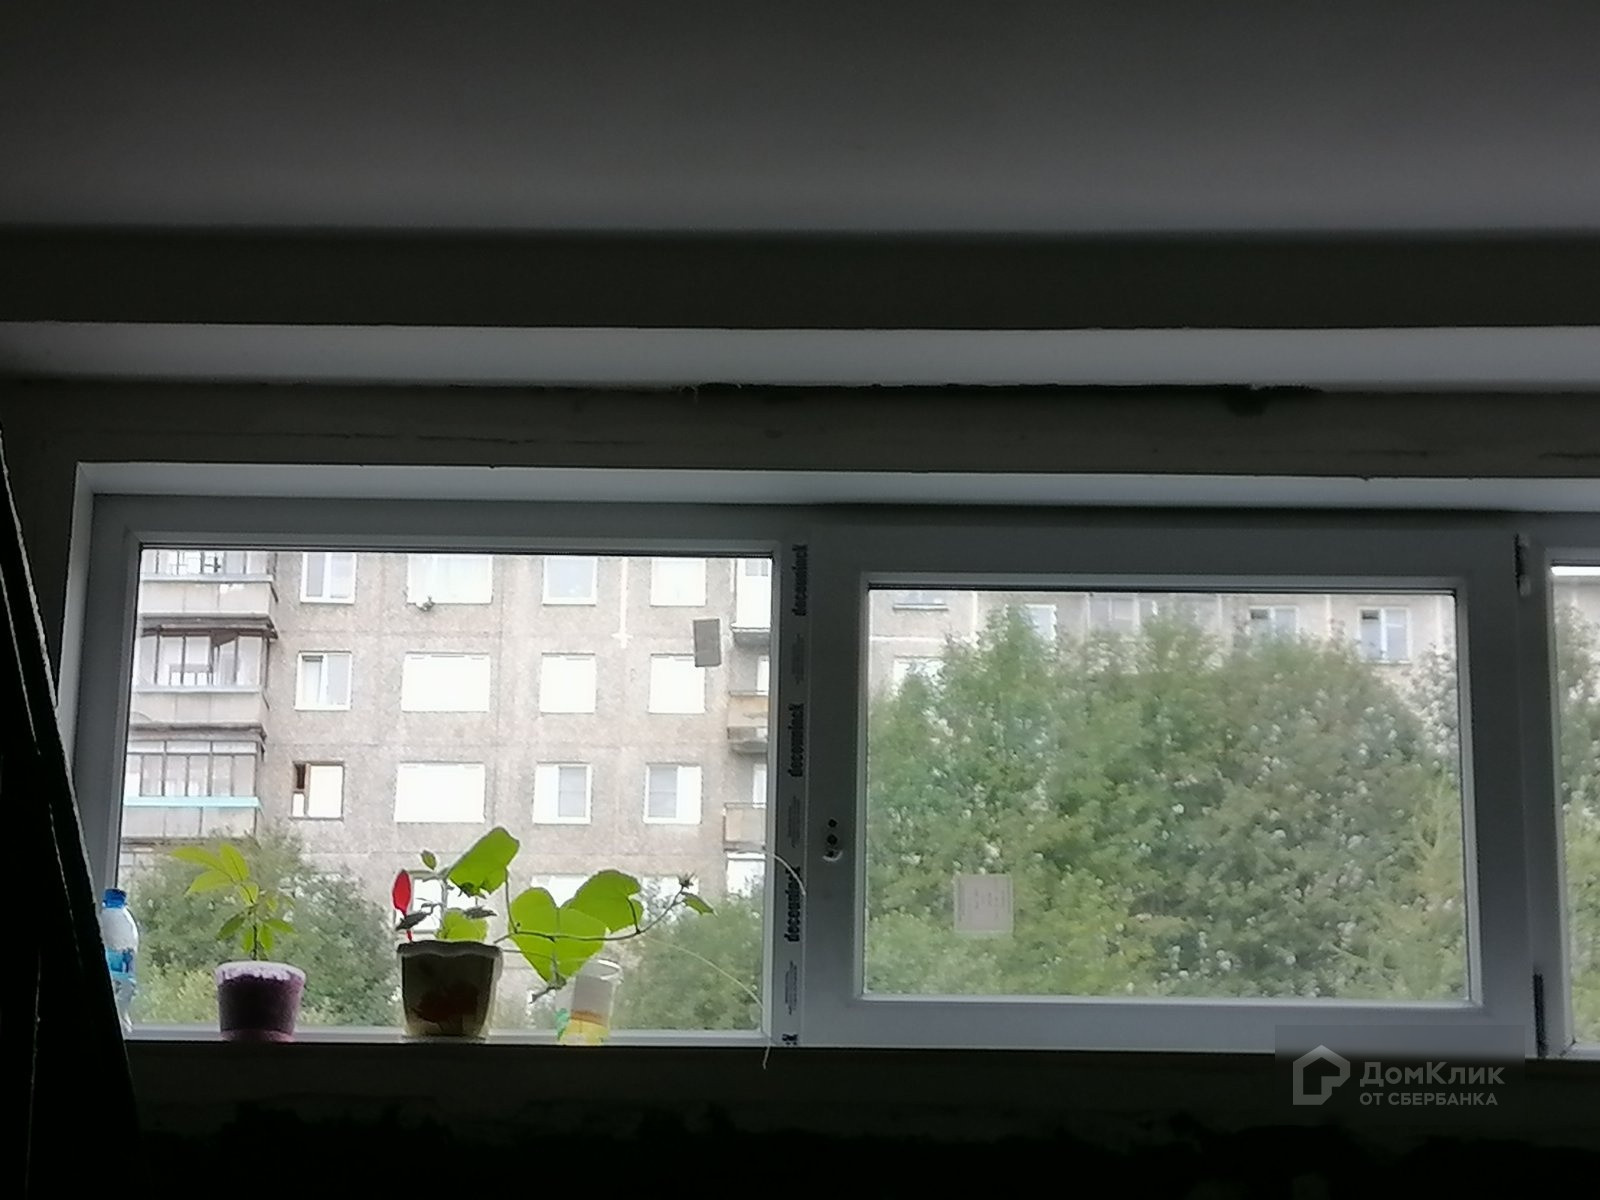 9 Этажа Мурманск квартиры без балкона Мурманск.